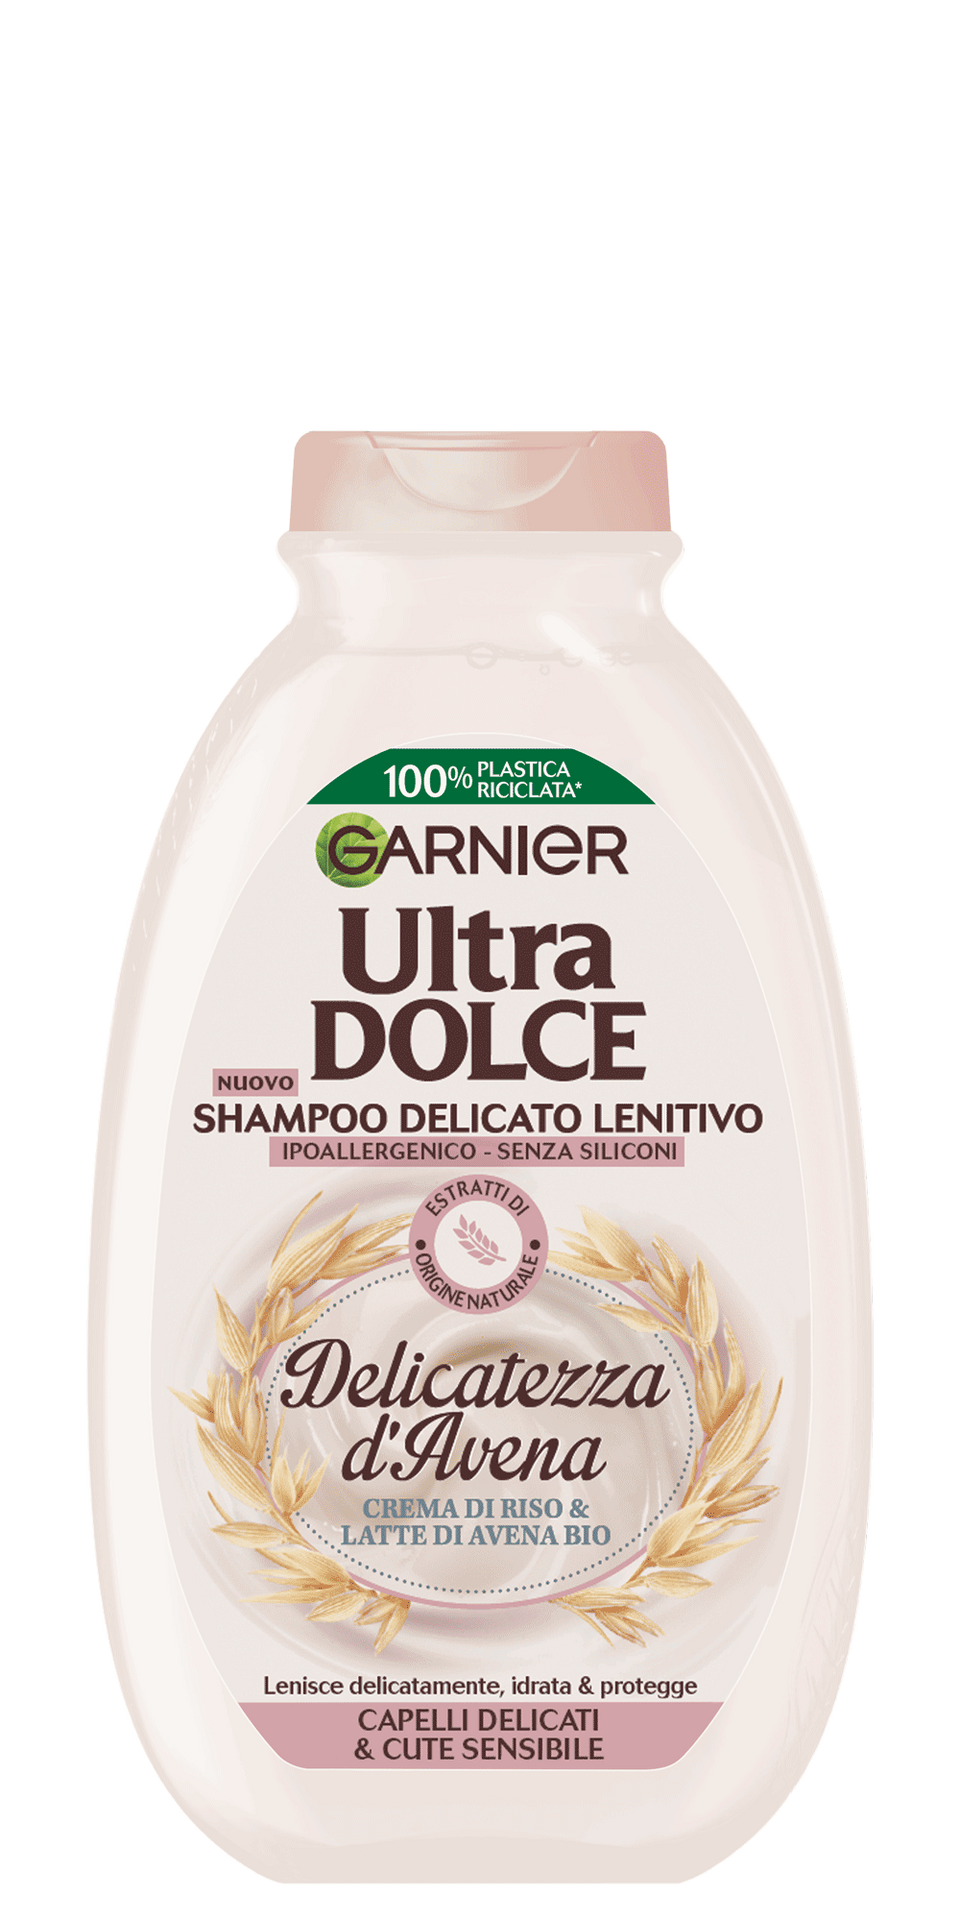 shampoo ultra dolce delicatezza d'avena